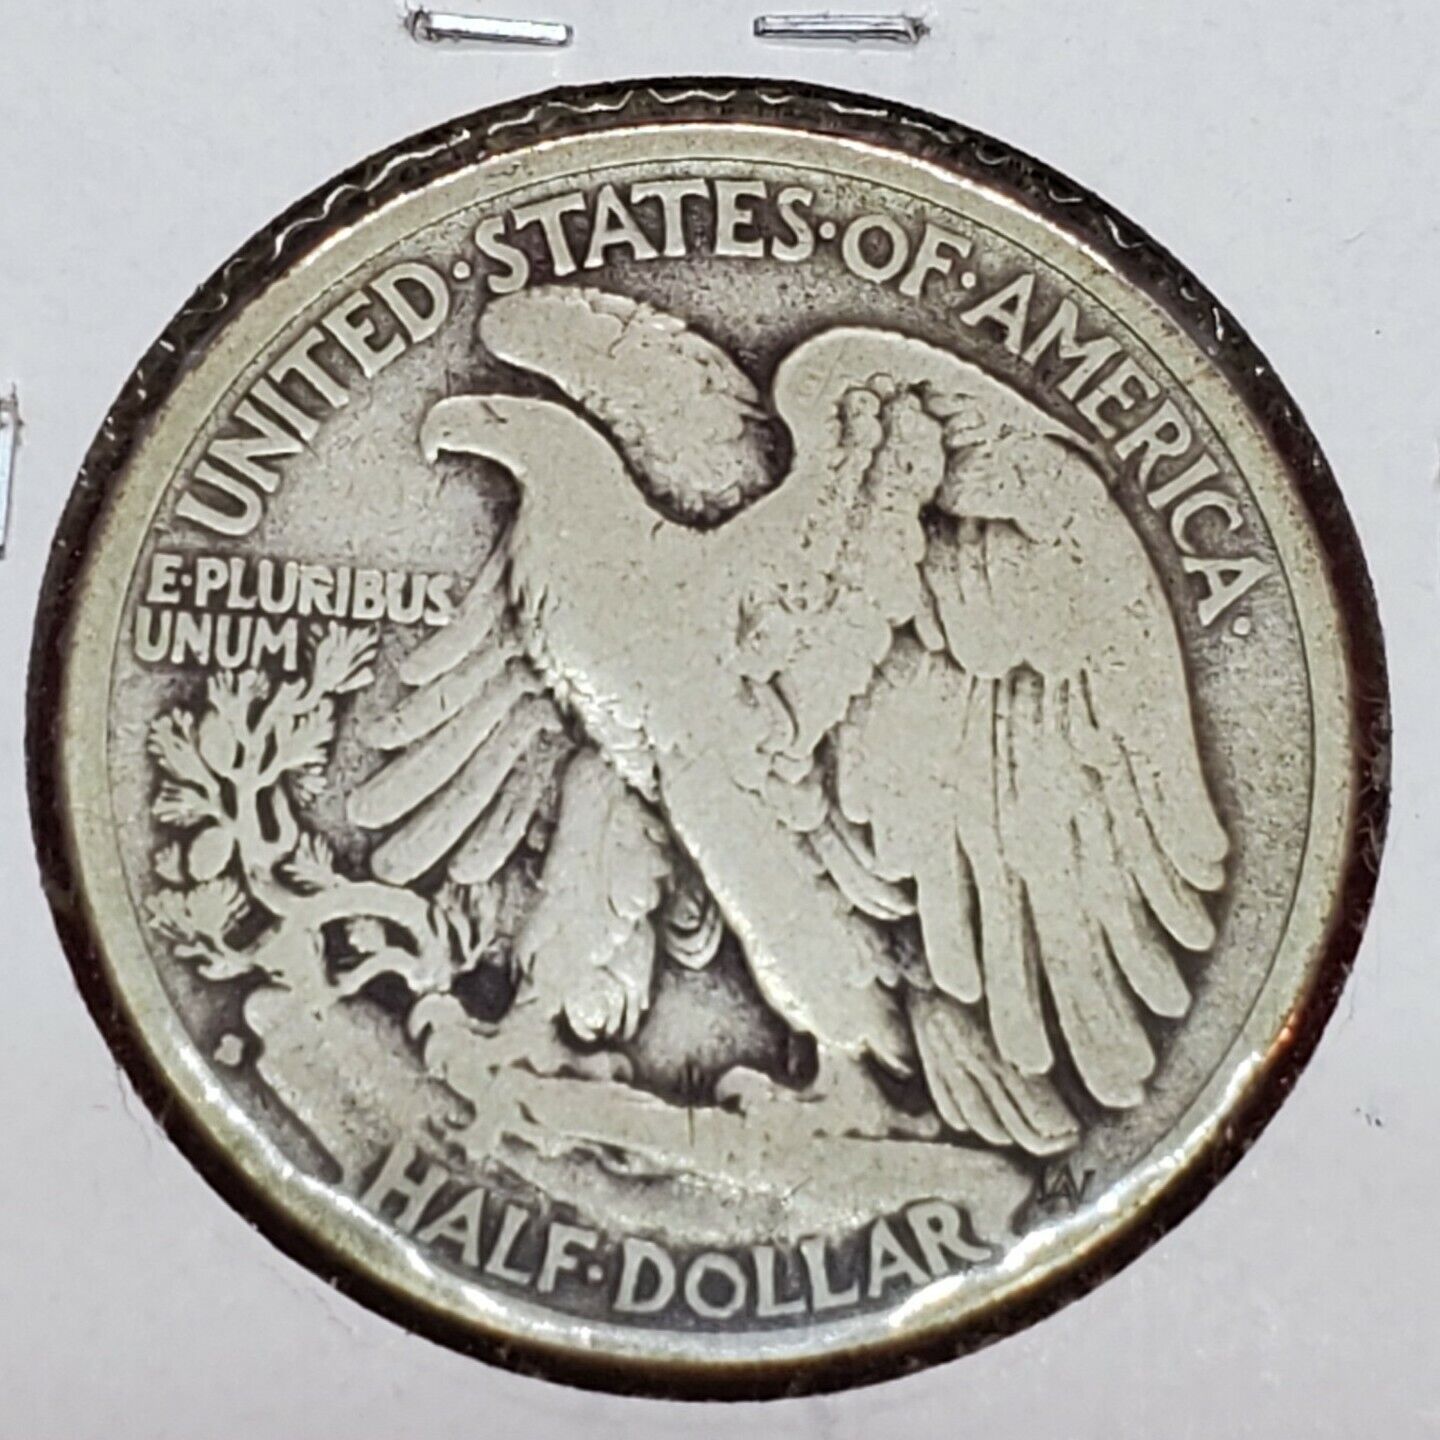 1935 S Walking Liberty Silver Eagle Half Dollar Coin Choice Fine Condition 2